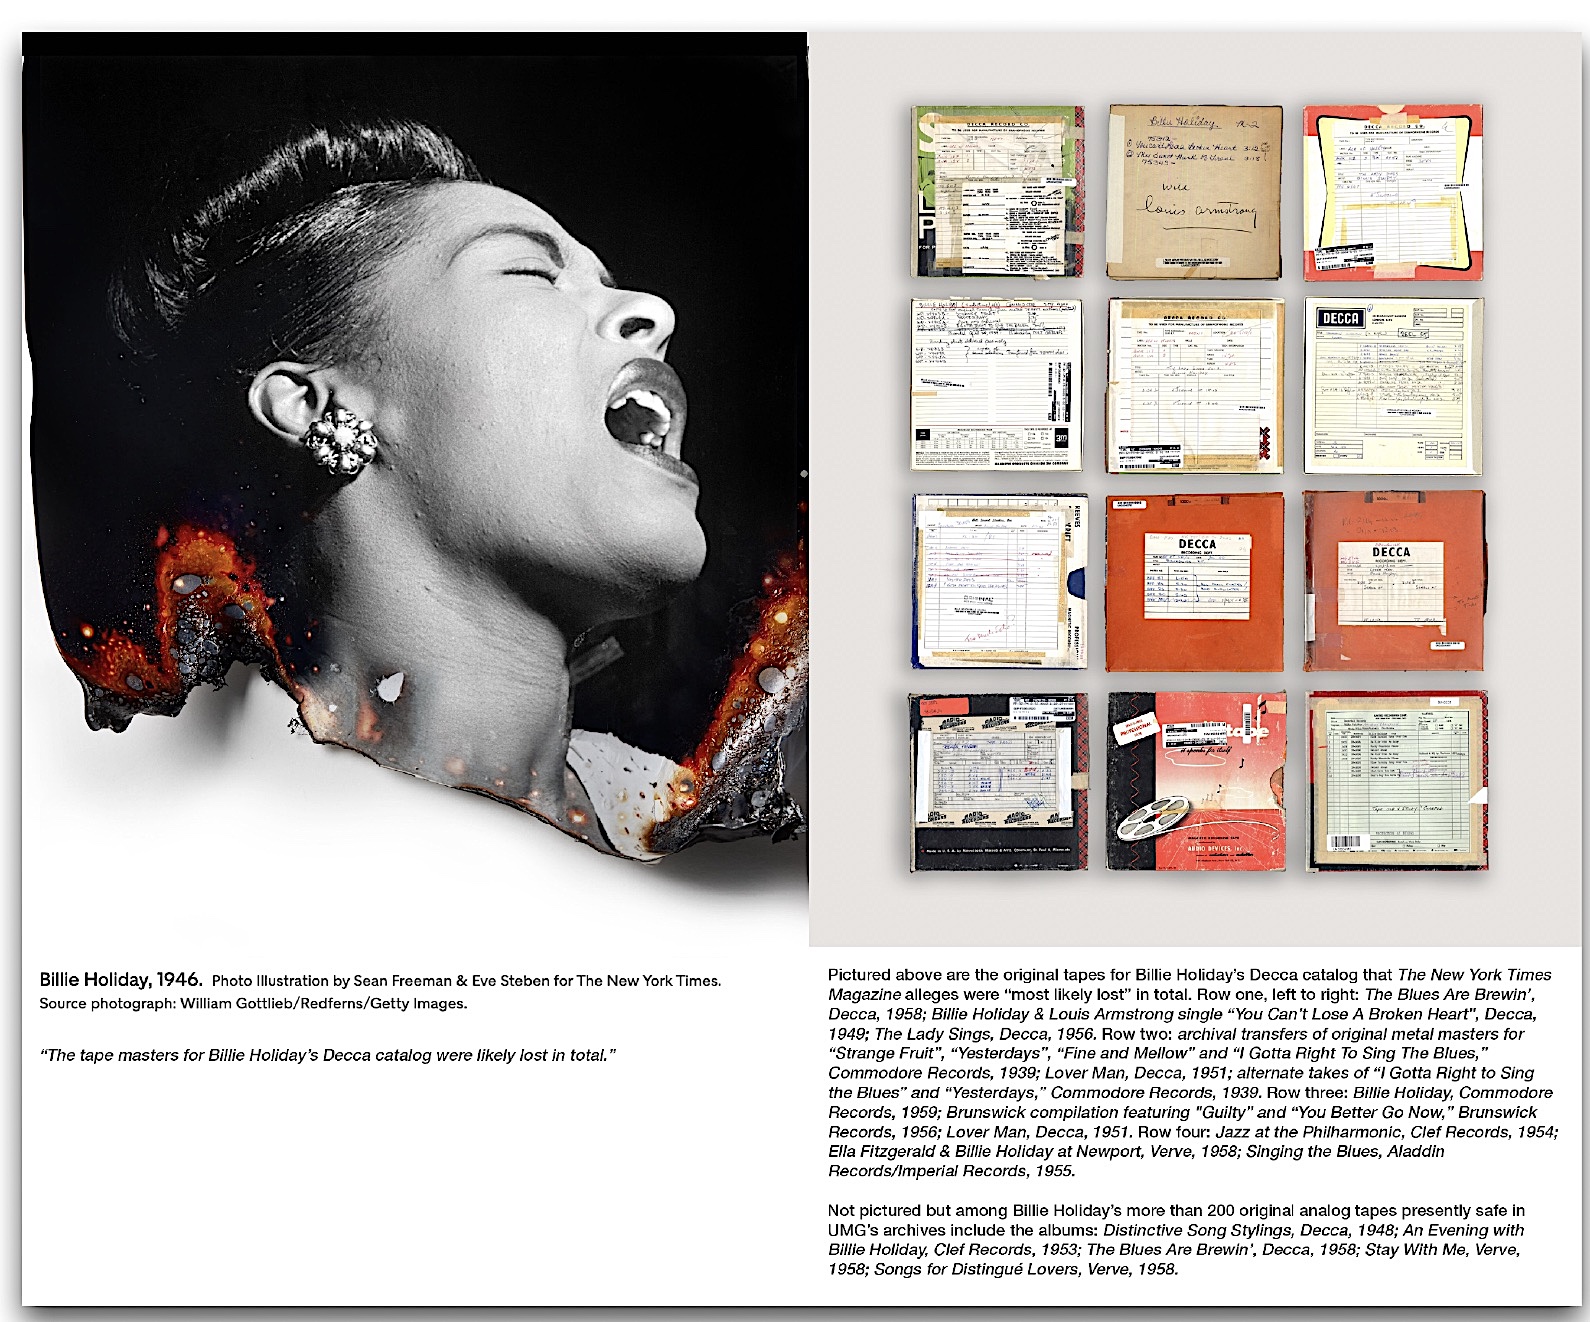 Billie Holiday master tapes